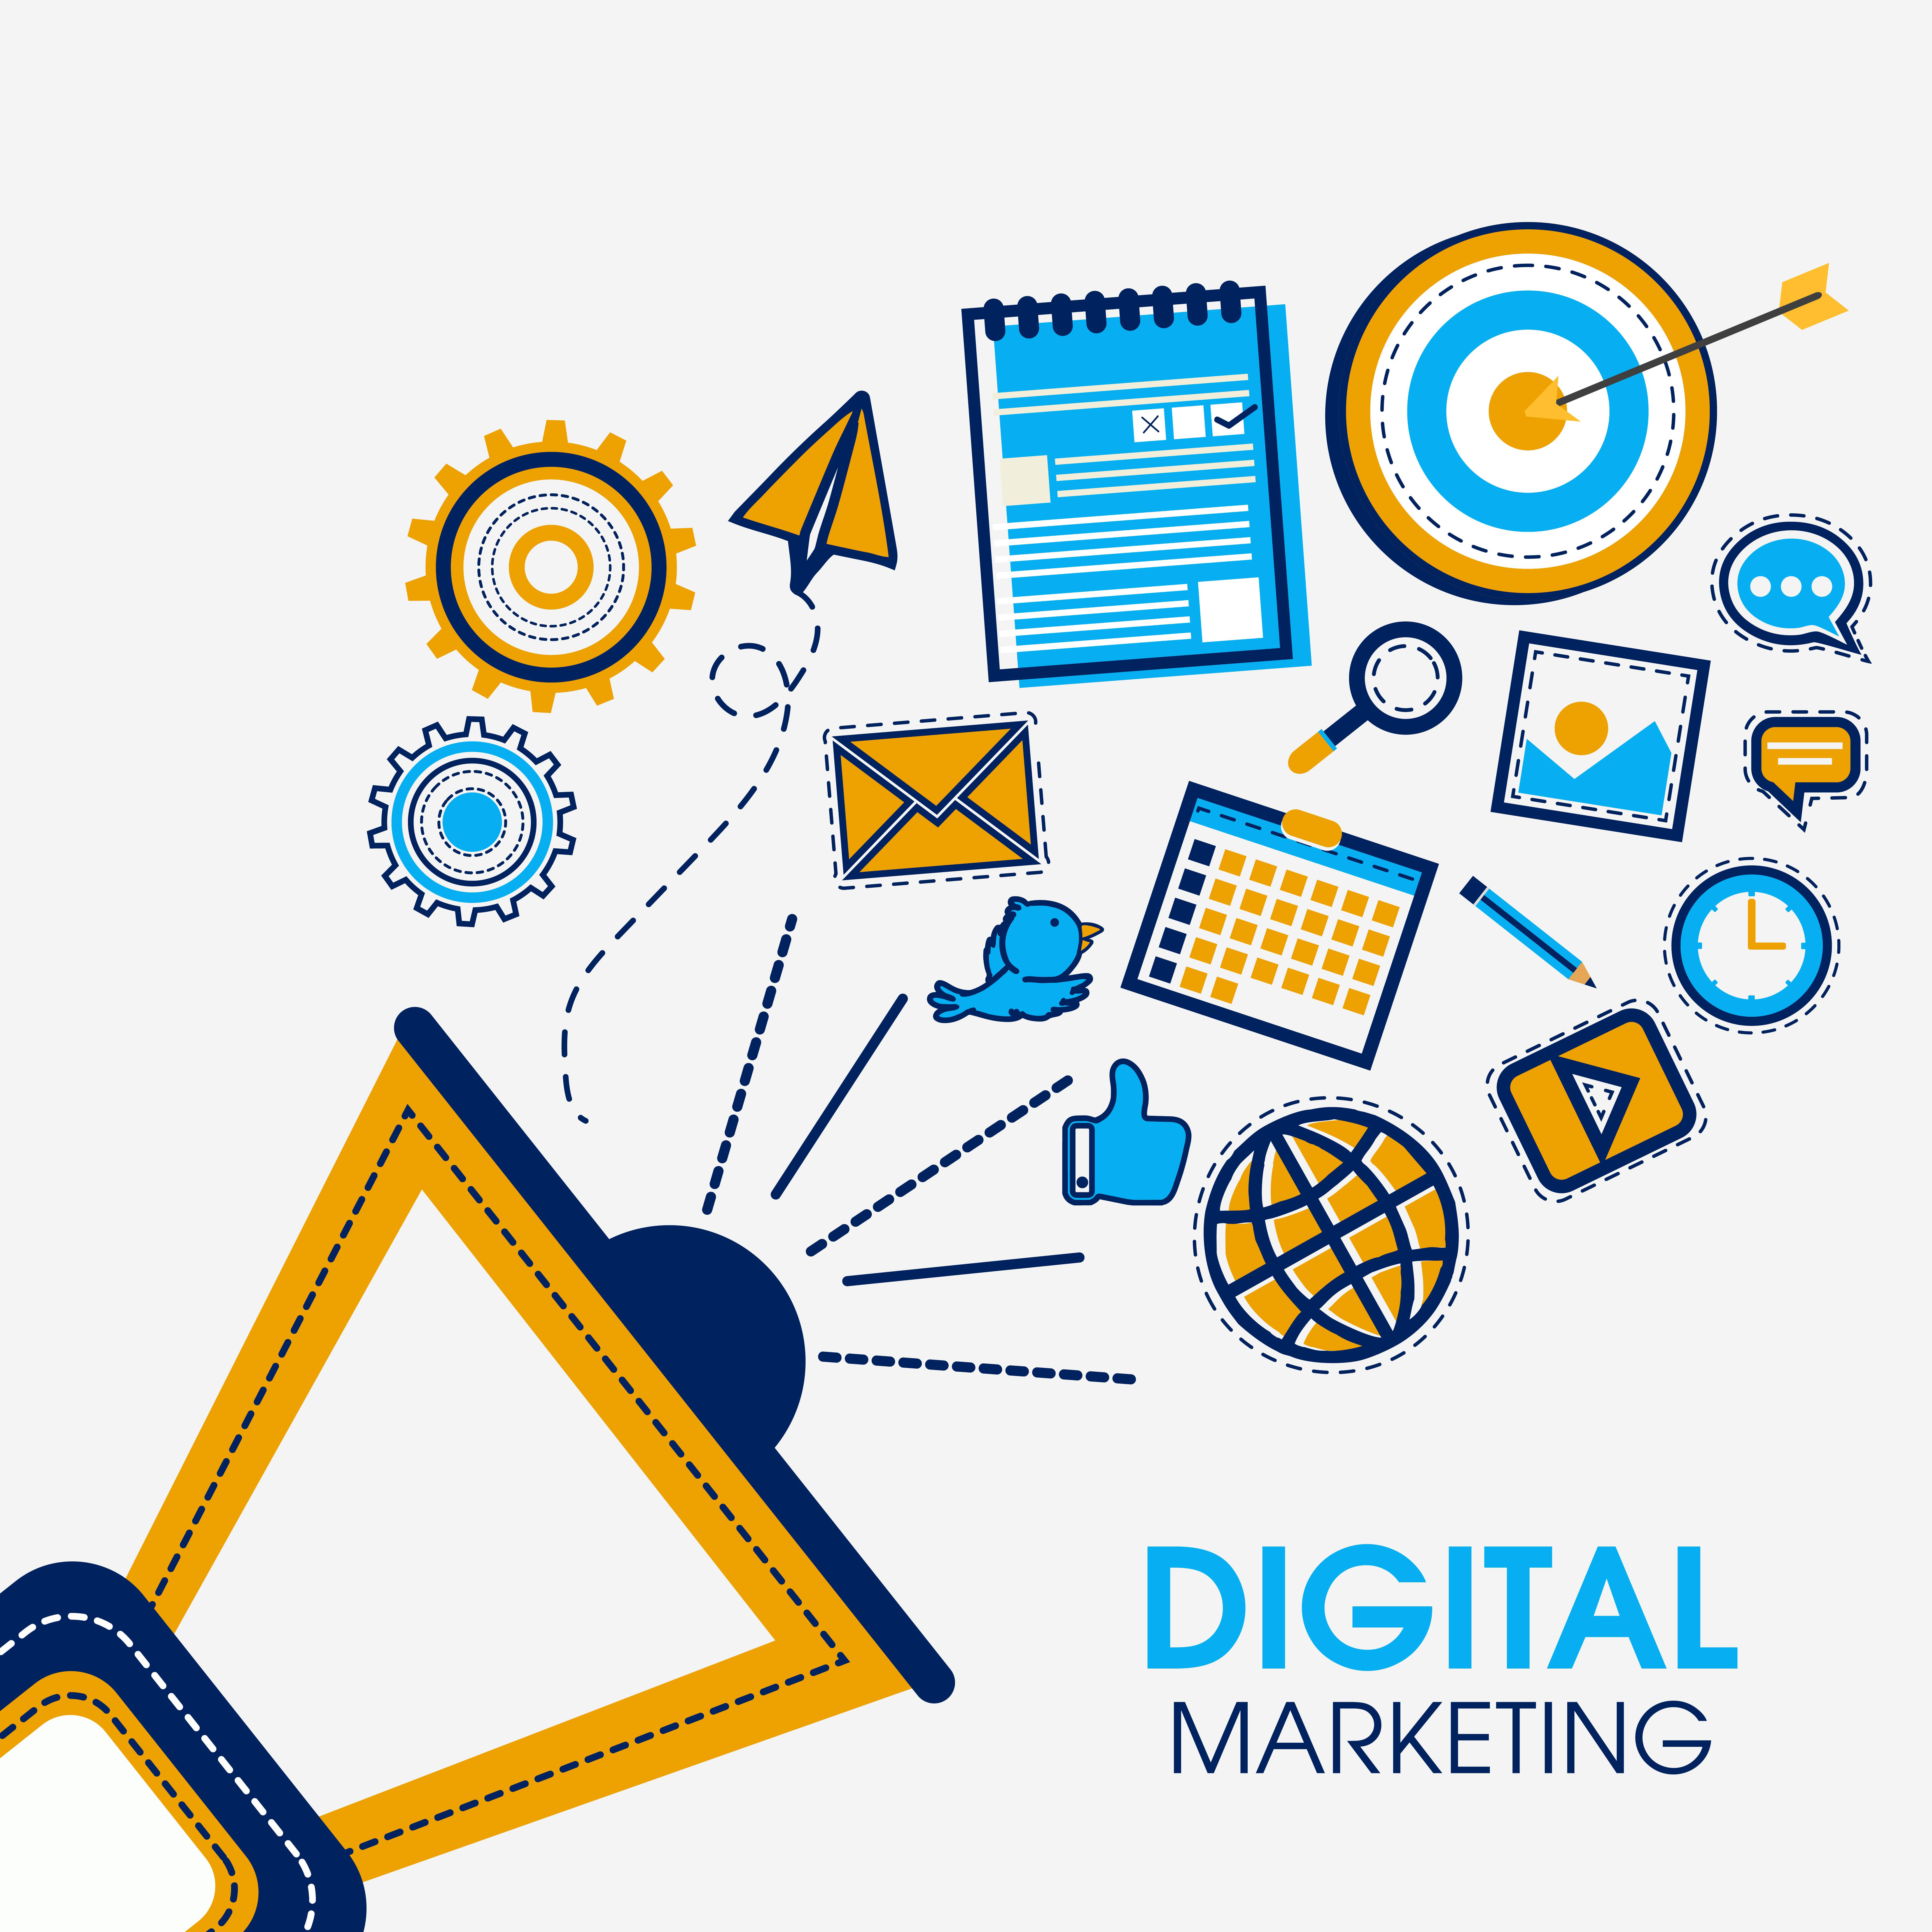 Digital-Marketing-Company-Advertising-Agency.jpg